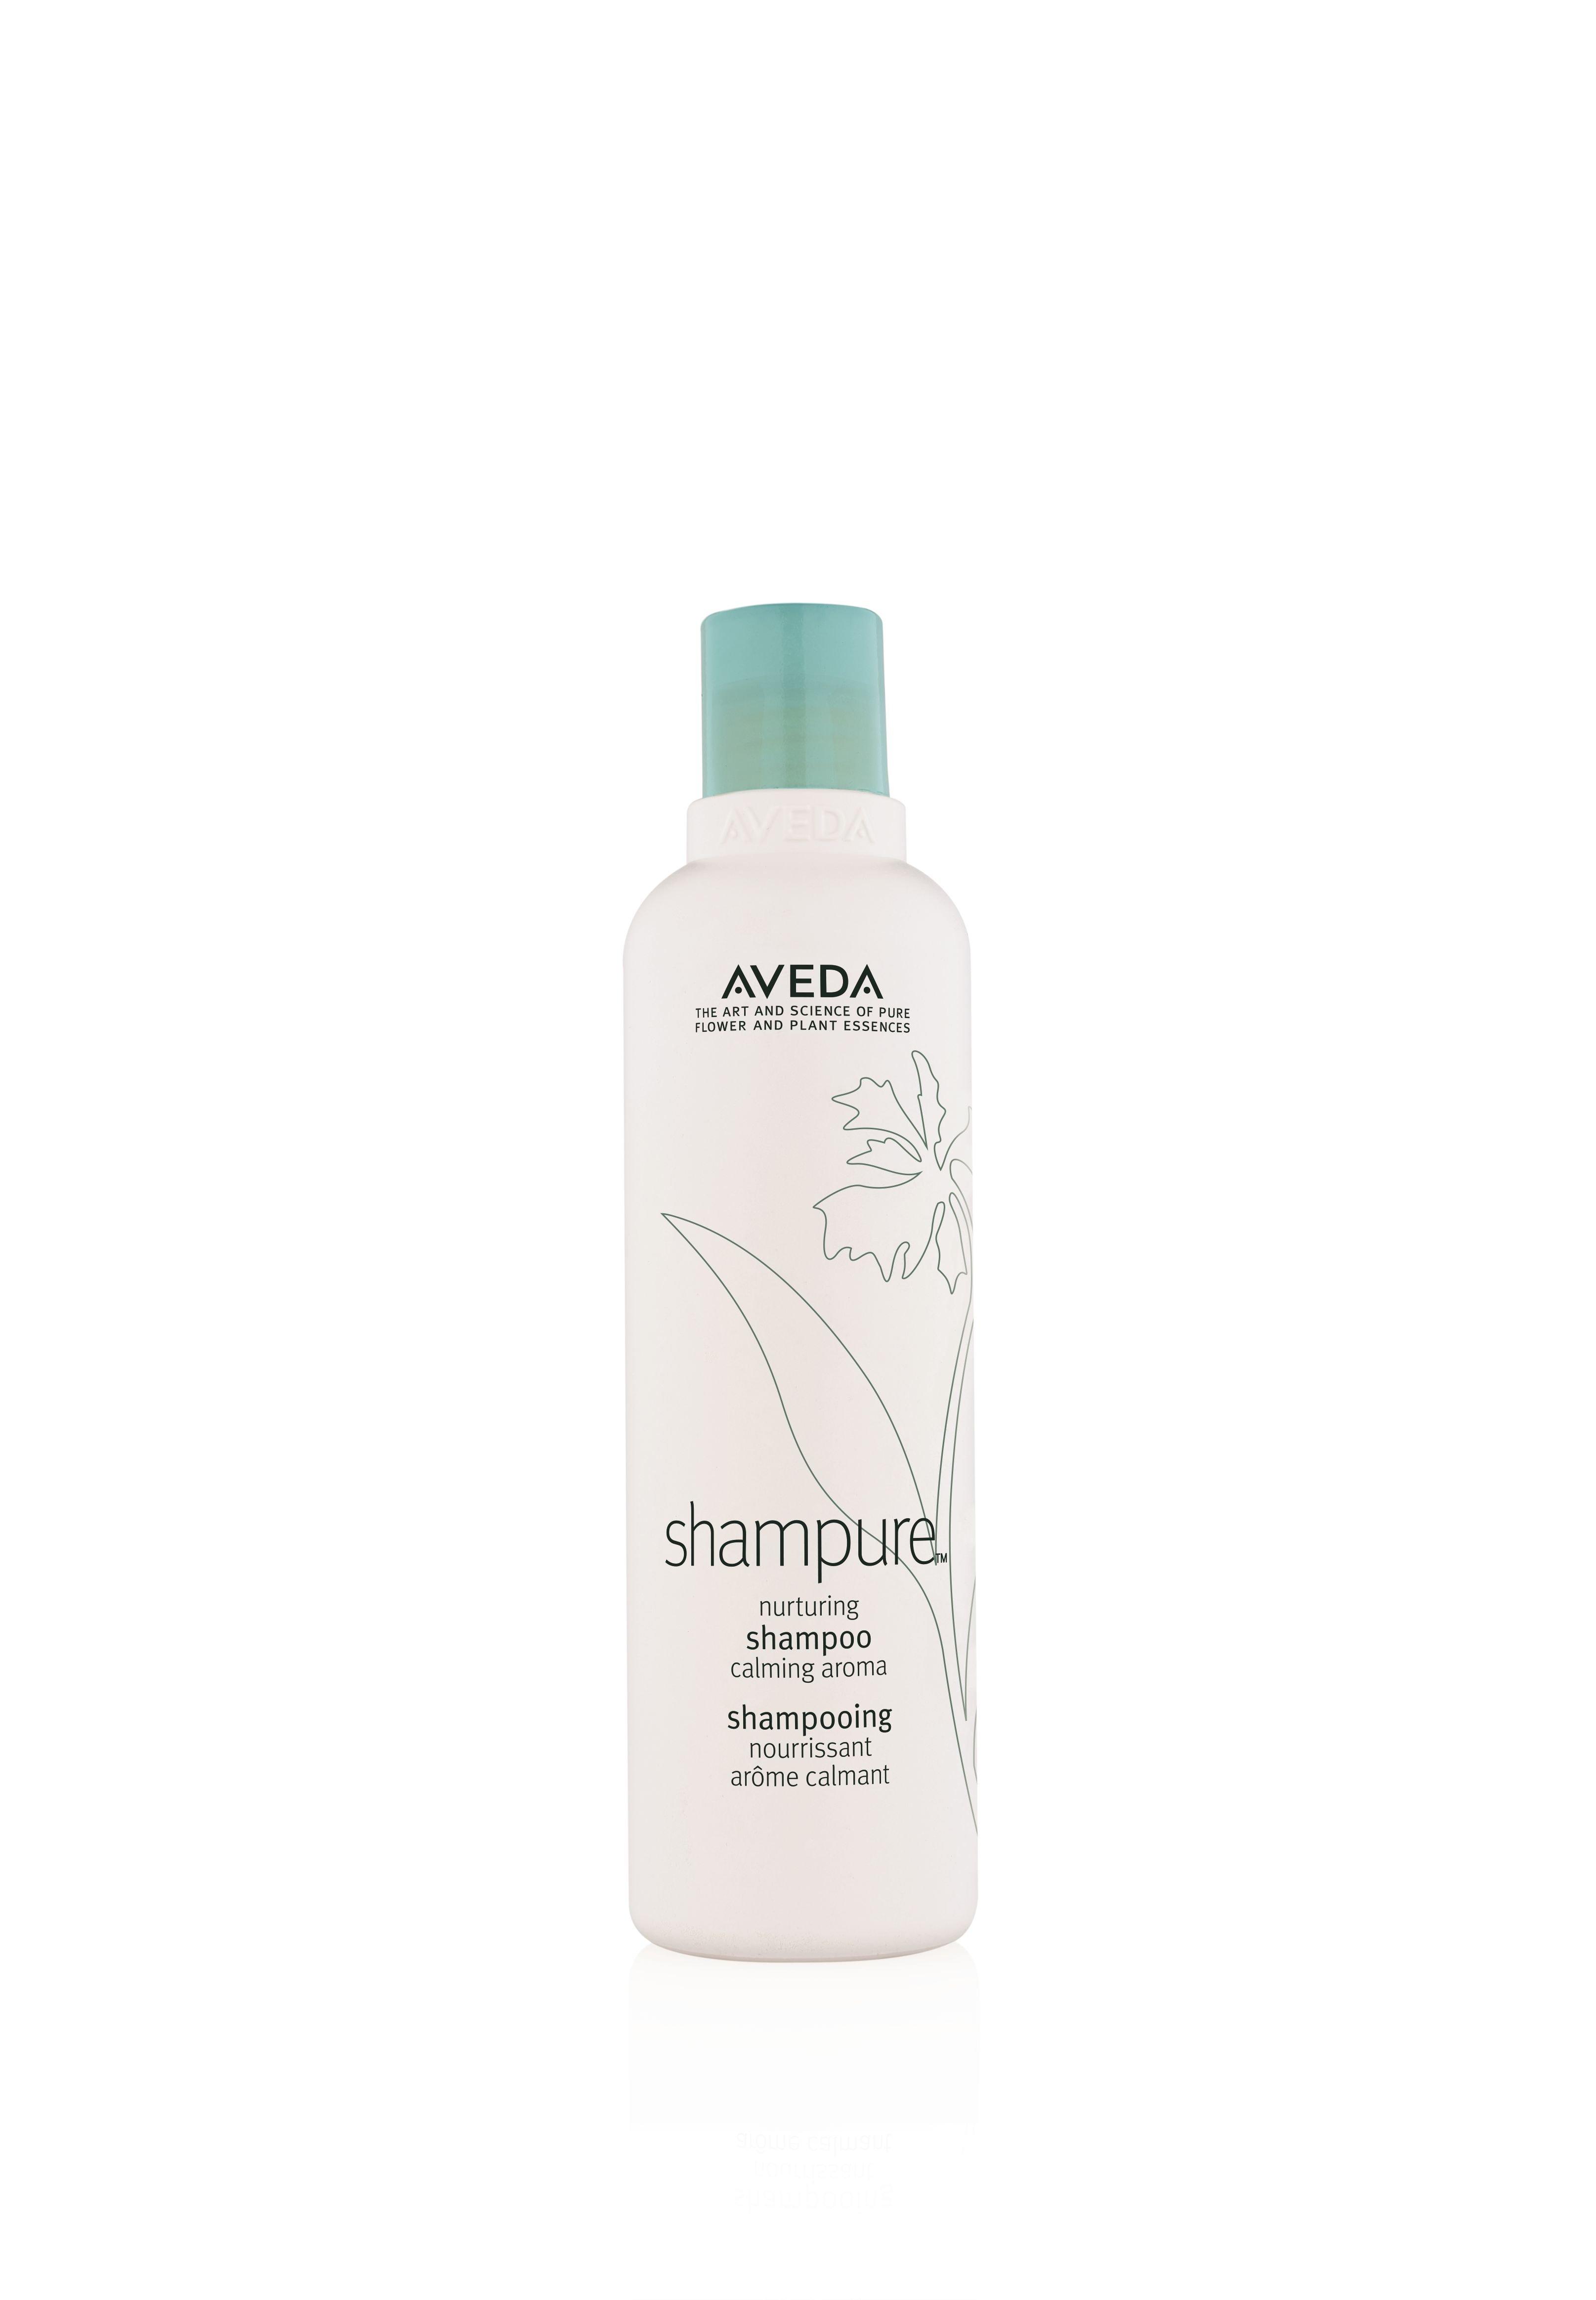 Image of AVEDA Shampure Shampoo - 250ml